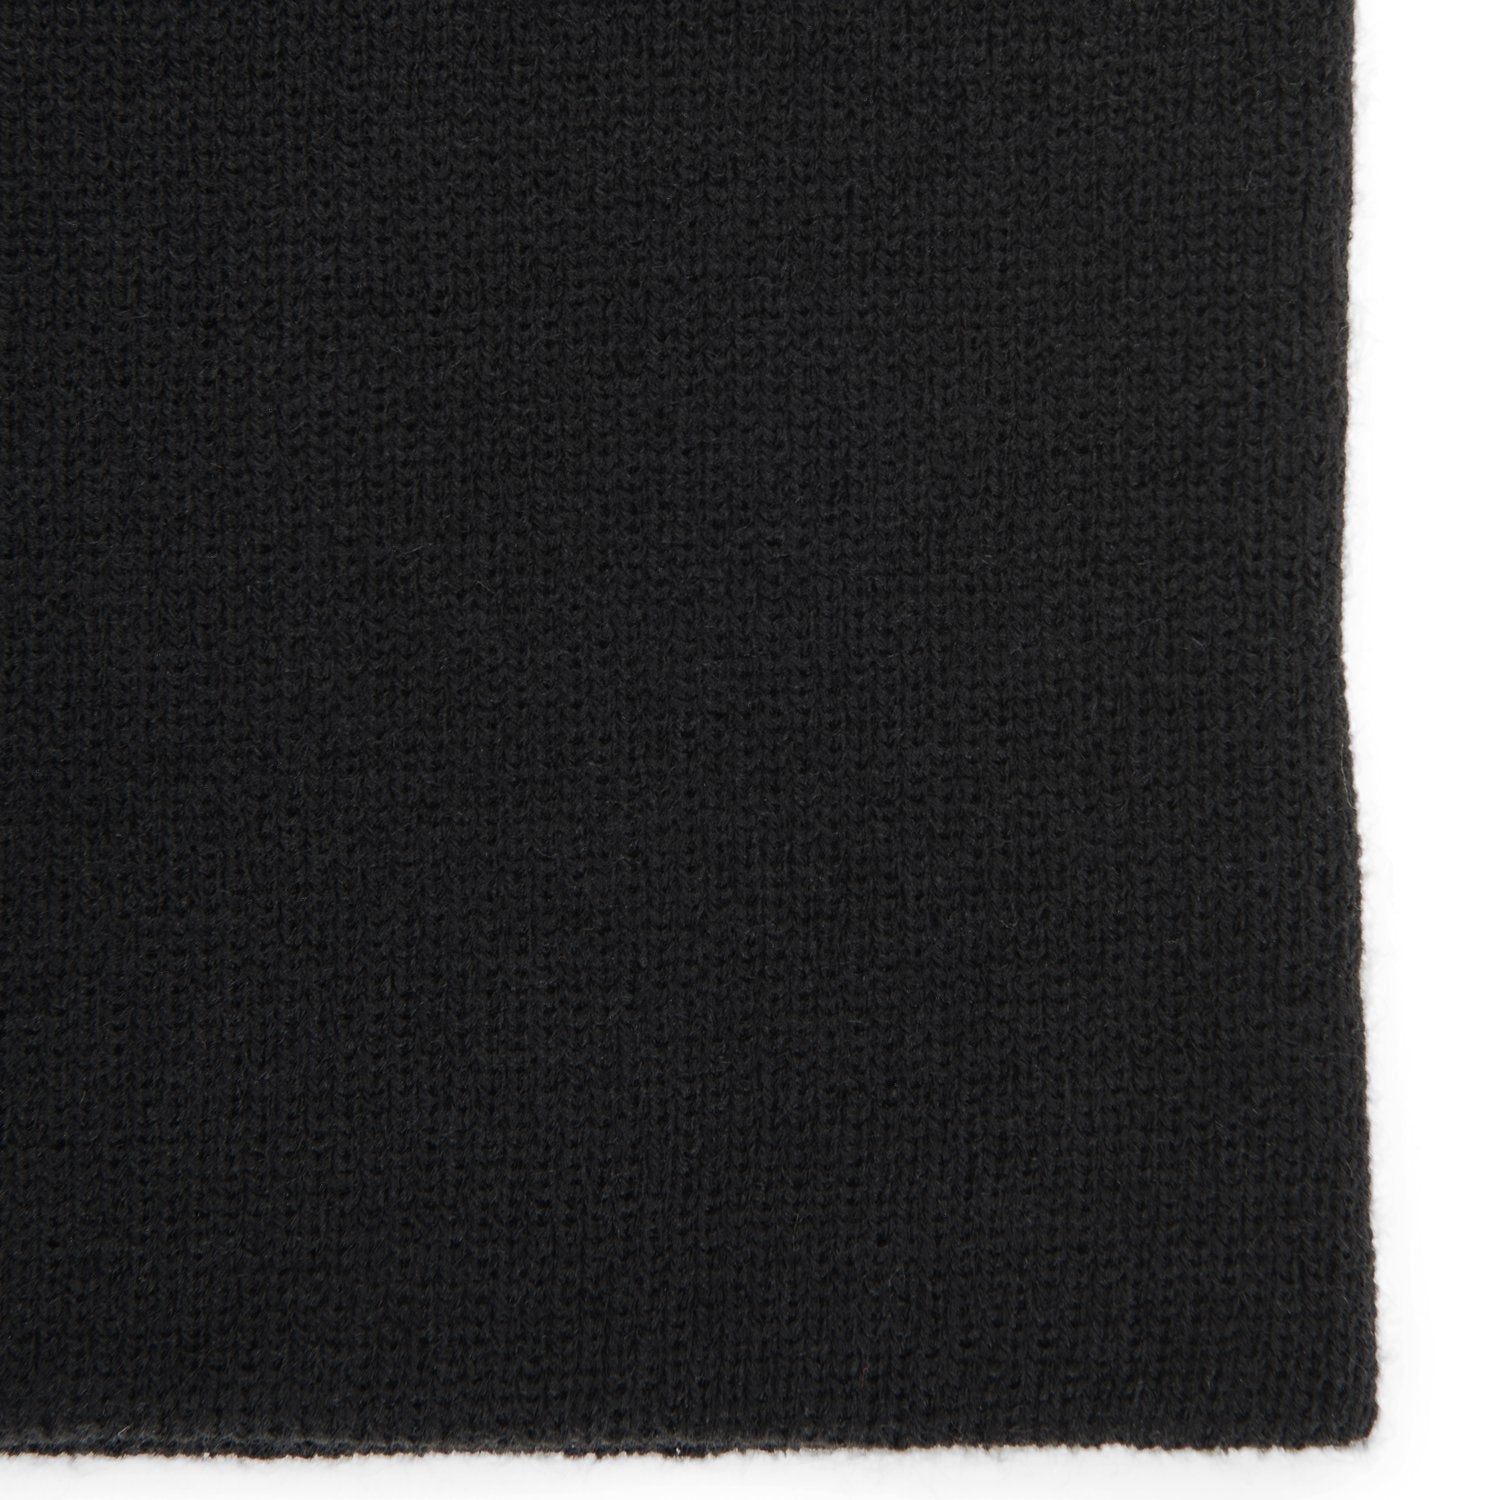 743 Acrylic Neck Warmer - Black fabric close-up - made in The USA Wigwam Socks